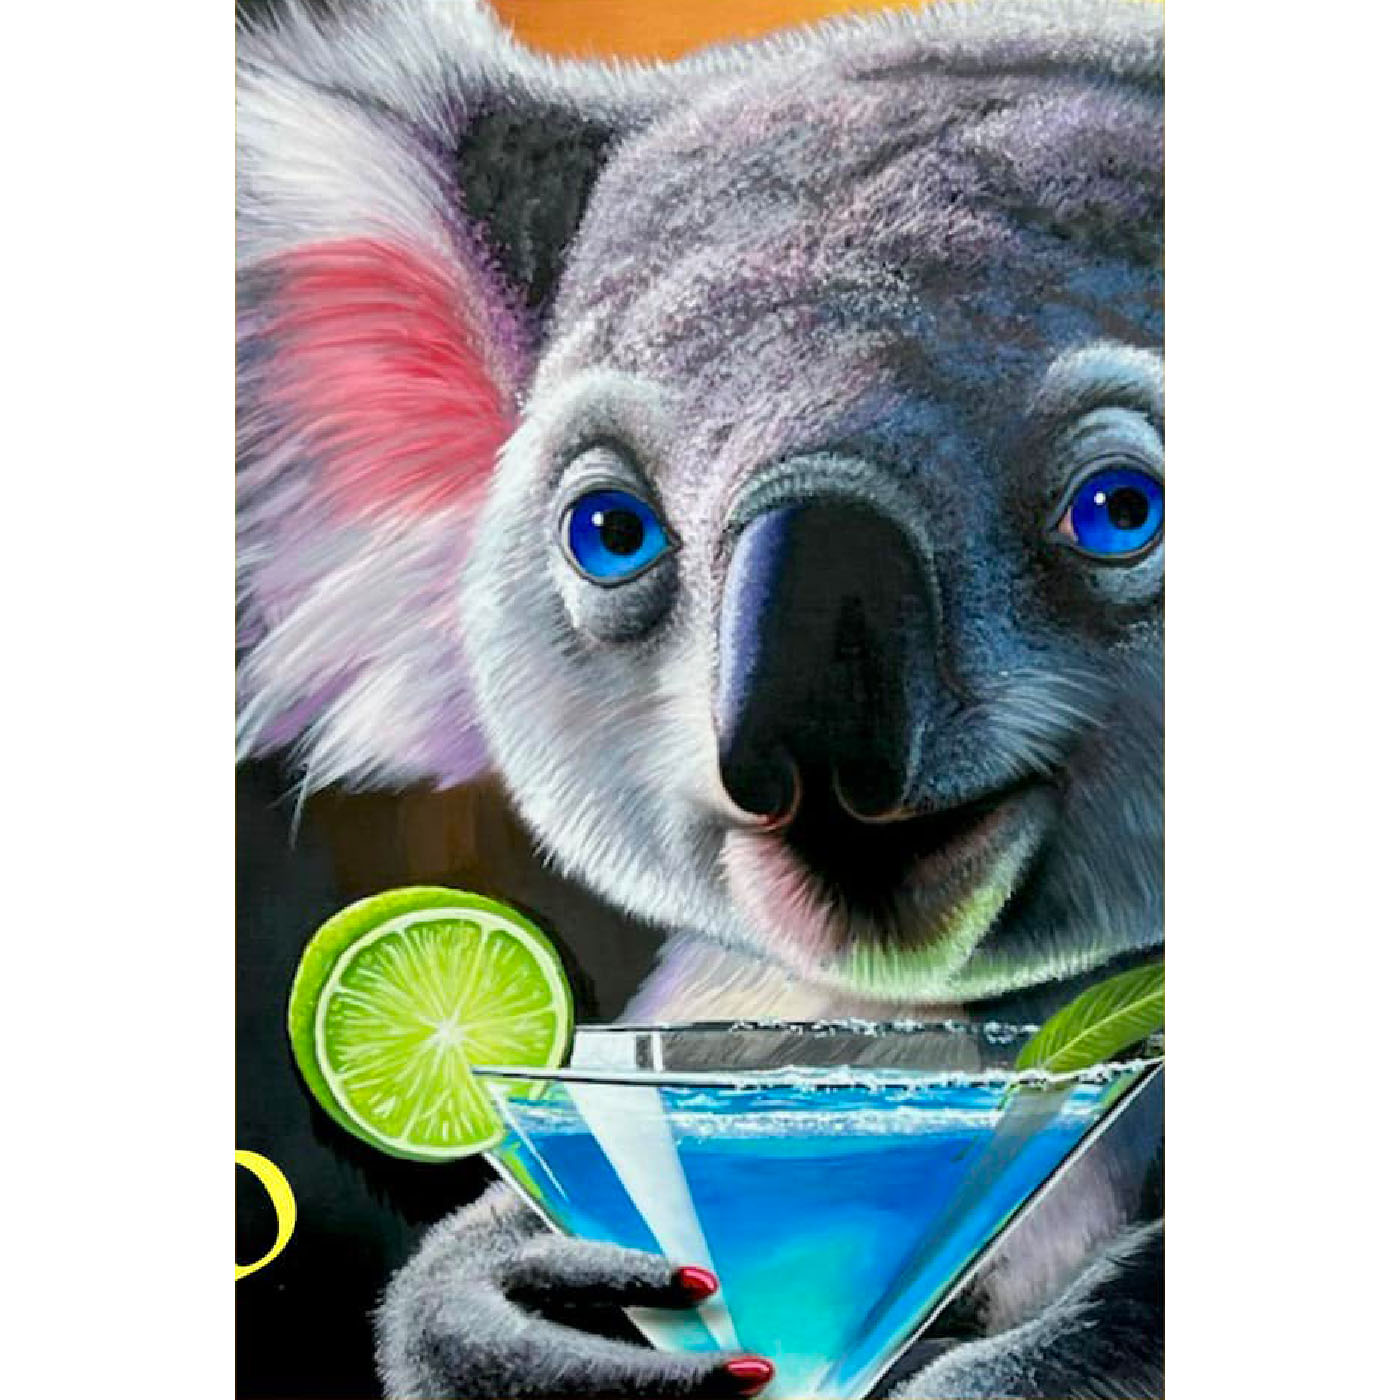 Michael Godard "Australian Koala Bear Title TBD" Limited Edition Canvas Giclee